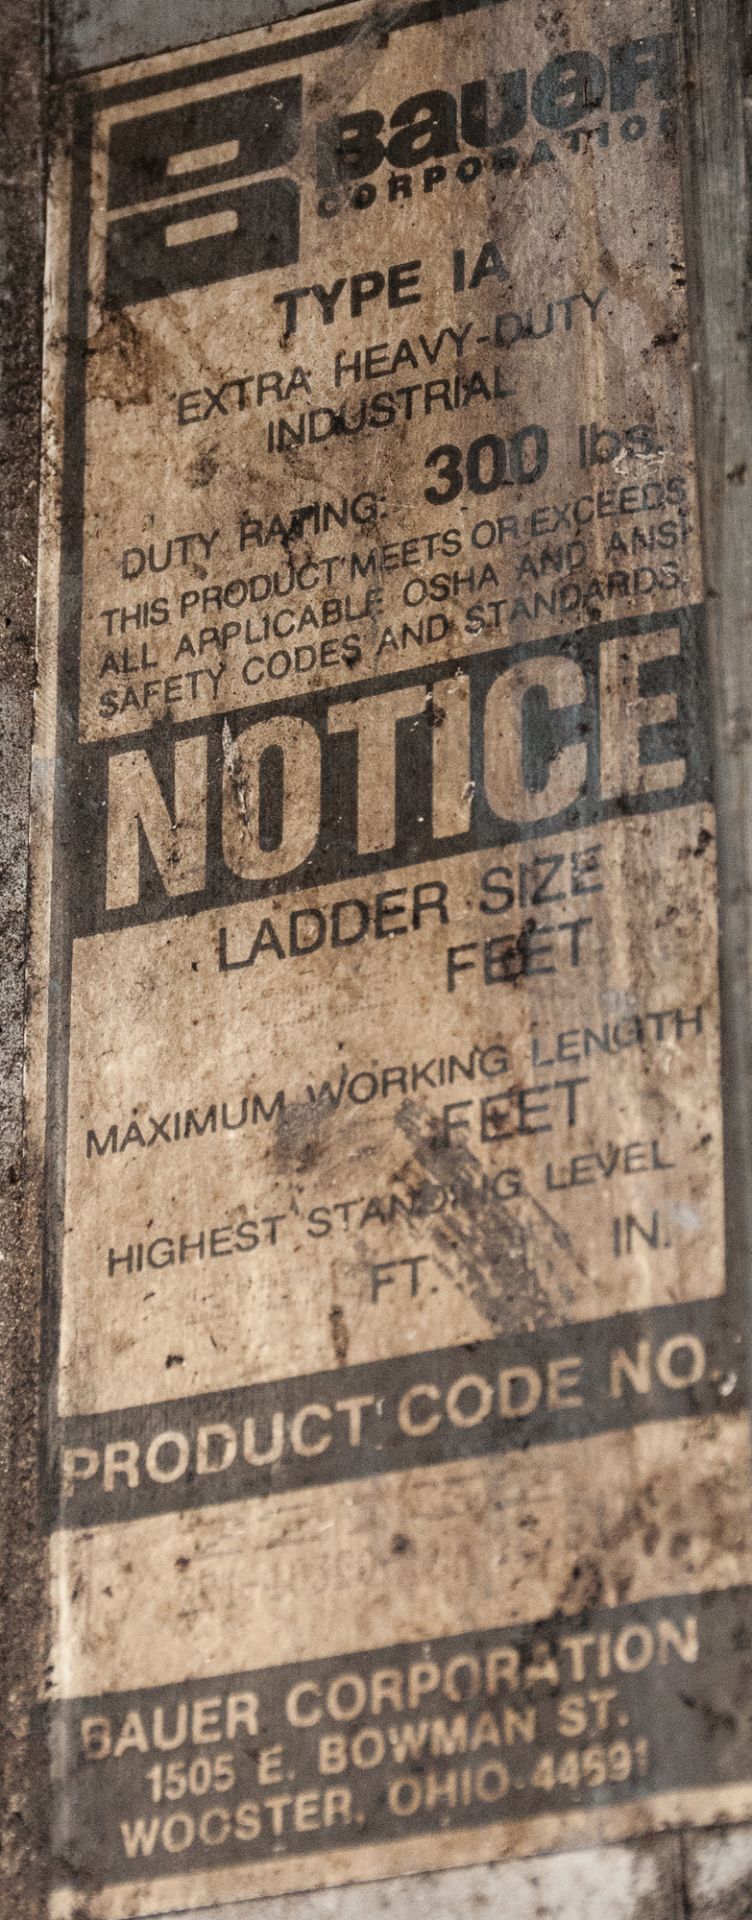 Aluminium Extension Ladder Approx. 30' 300 lb. Cap. - Image 2 of 2